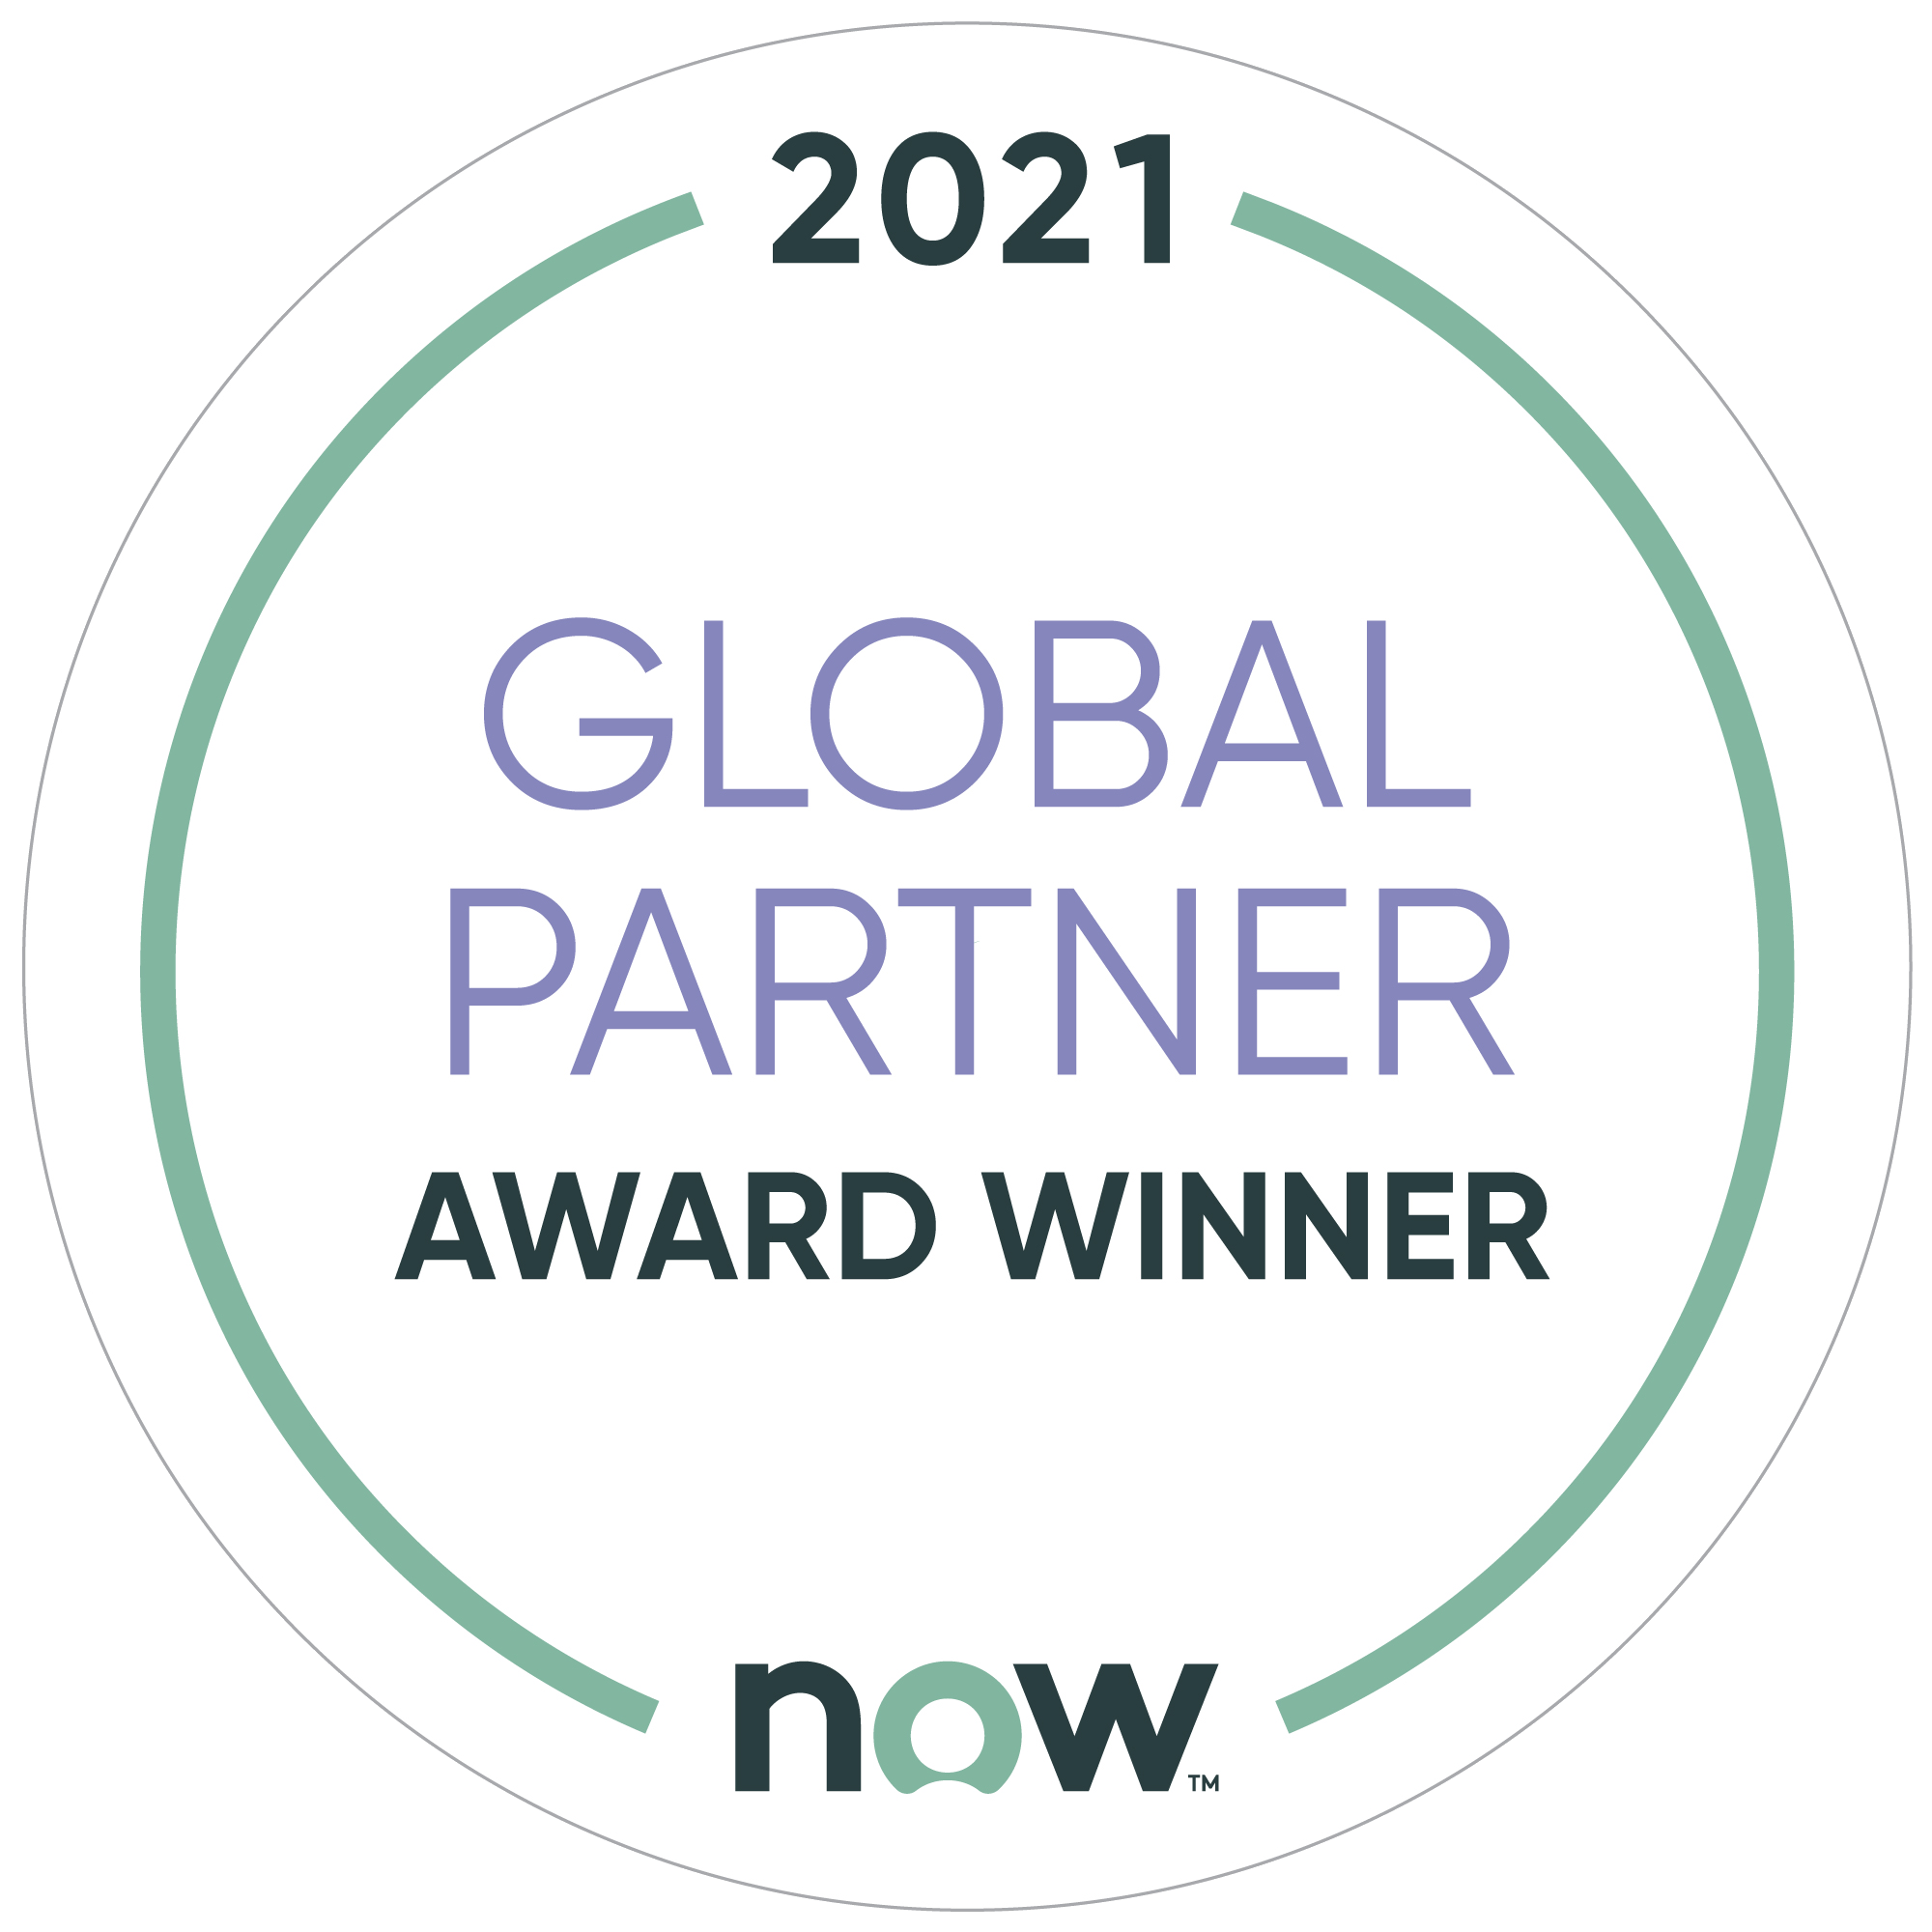 Devoteam is a Global ServiceNow Partner Award Winner in 2021